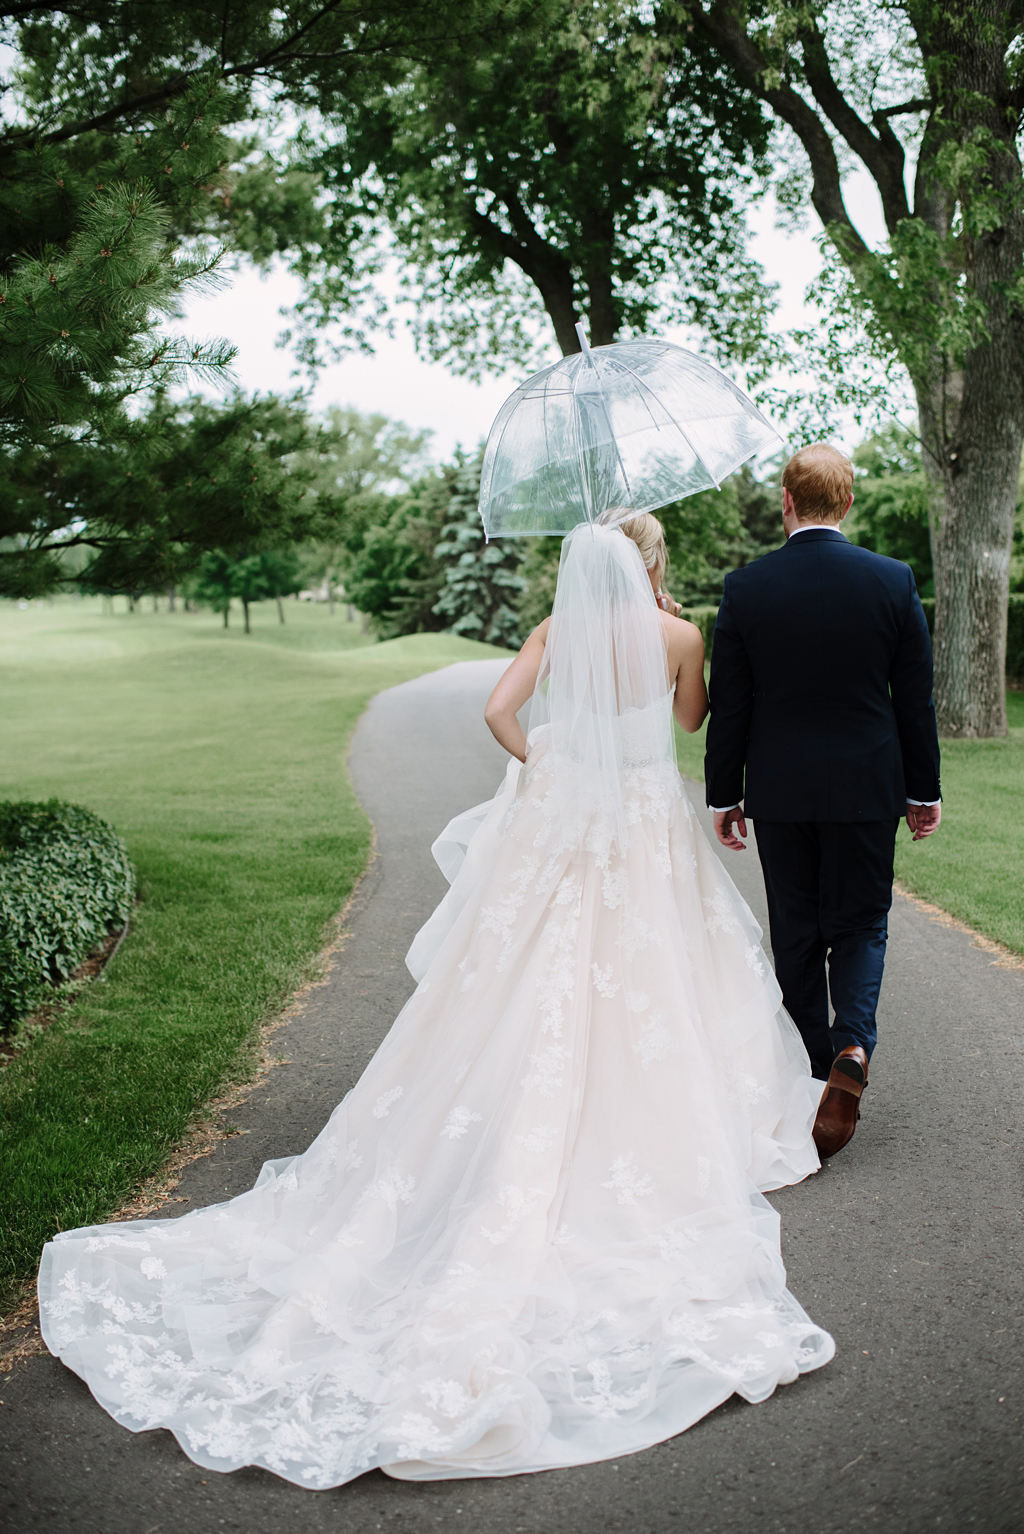 bride and groom walk away together under umbrella